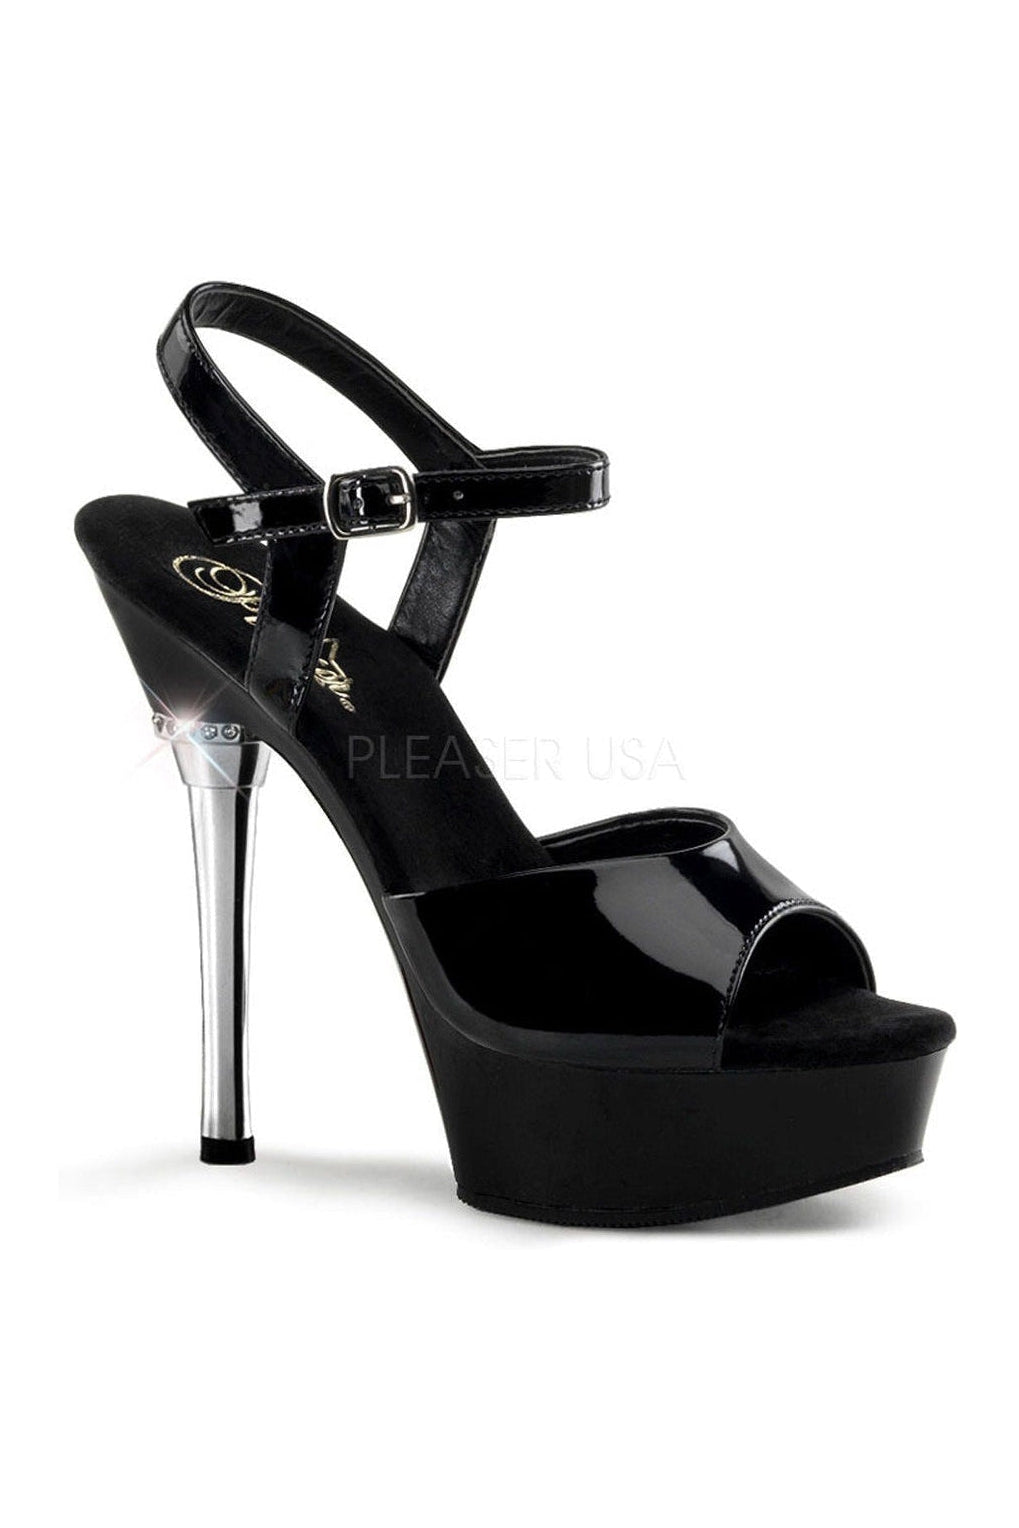 ALLURE-609 Platform Sandal | Black Patent-Pleaser-Black-Sandals-SEXYSHOES.COM